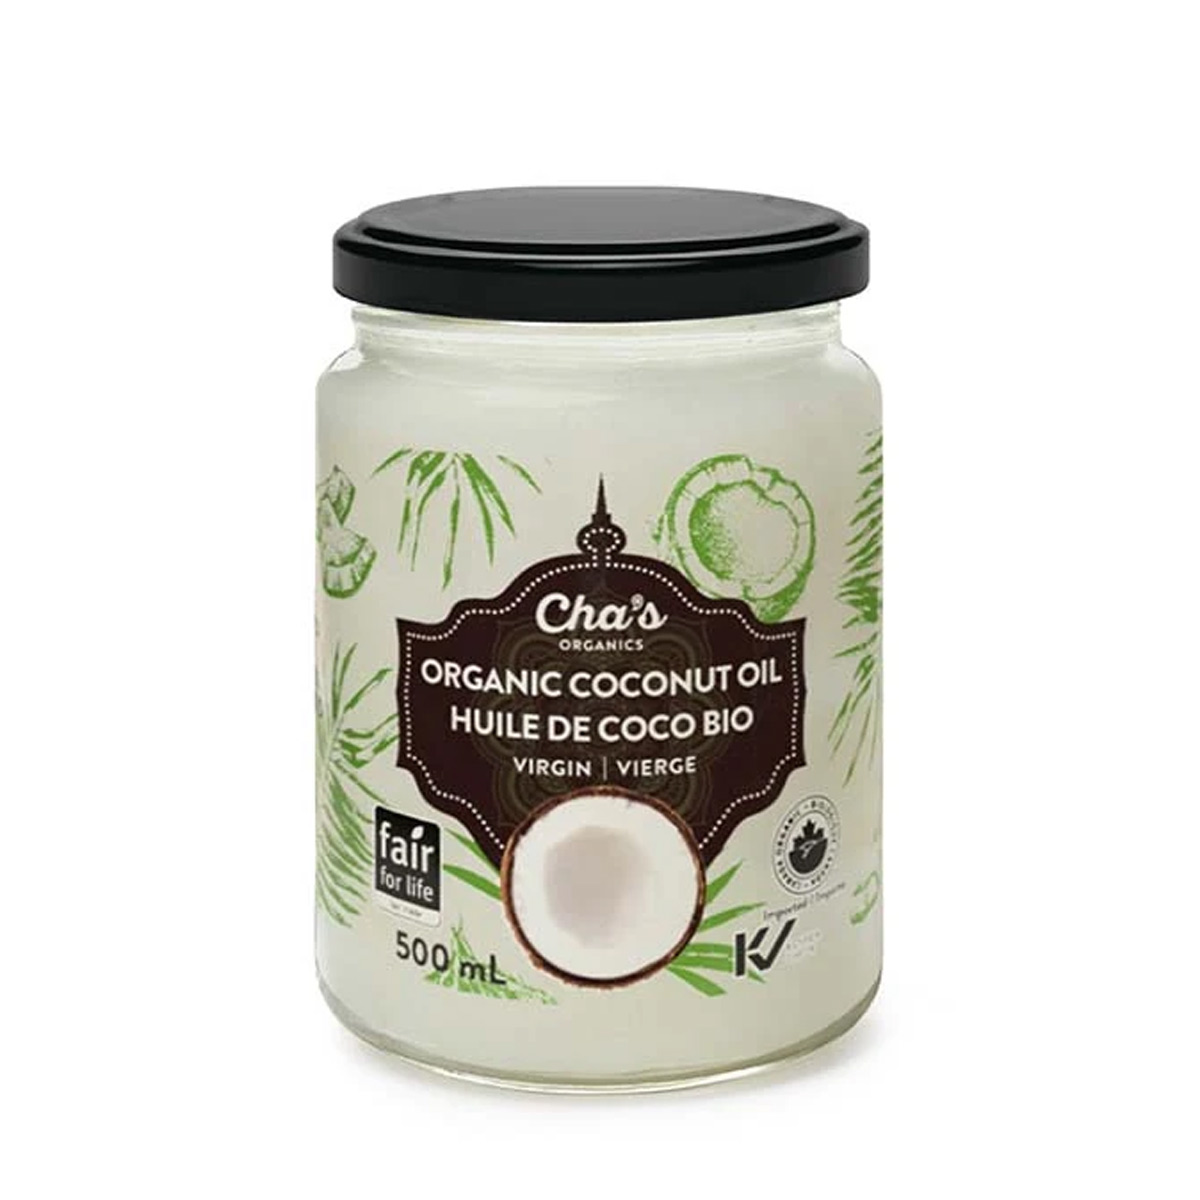 Cha's Organic Fair Trade Organic Virgin Coconut Oil (Bottle) 500ml